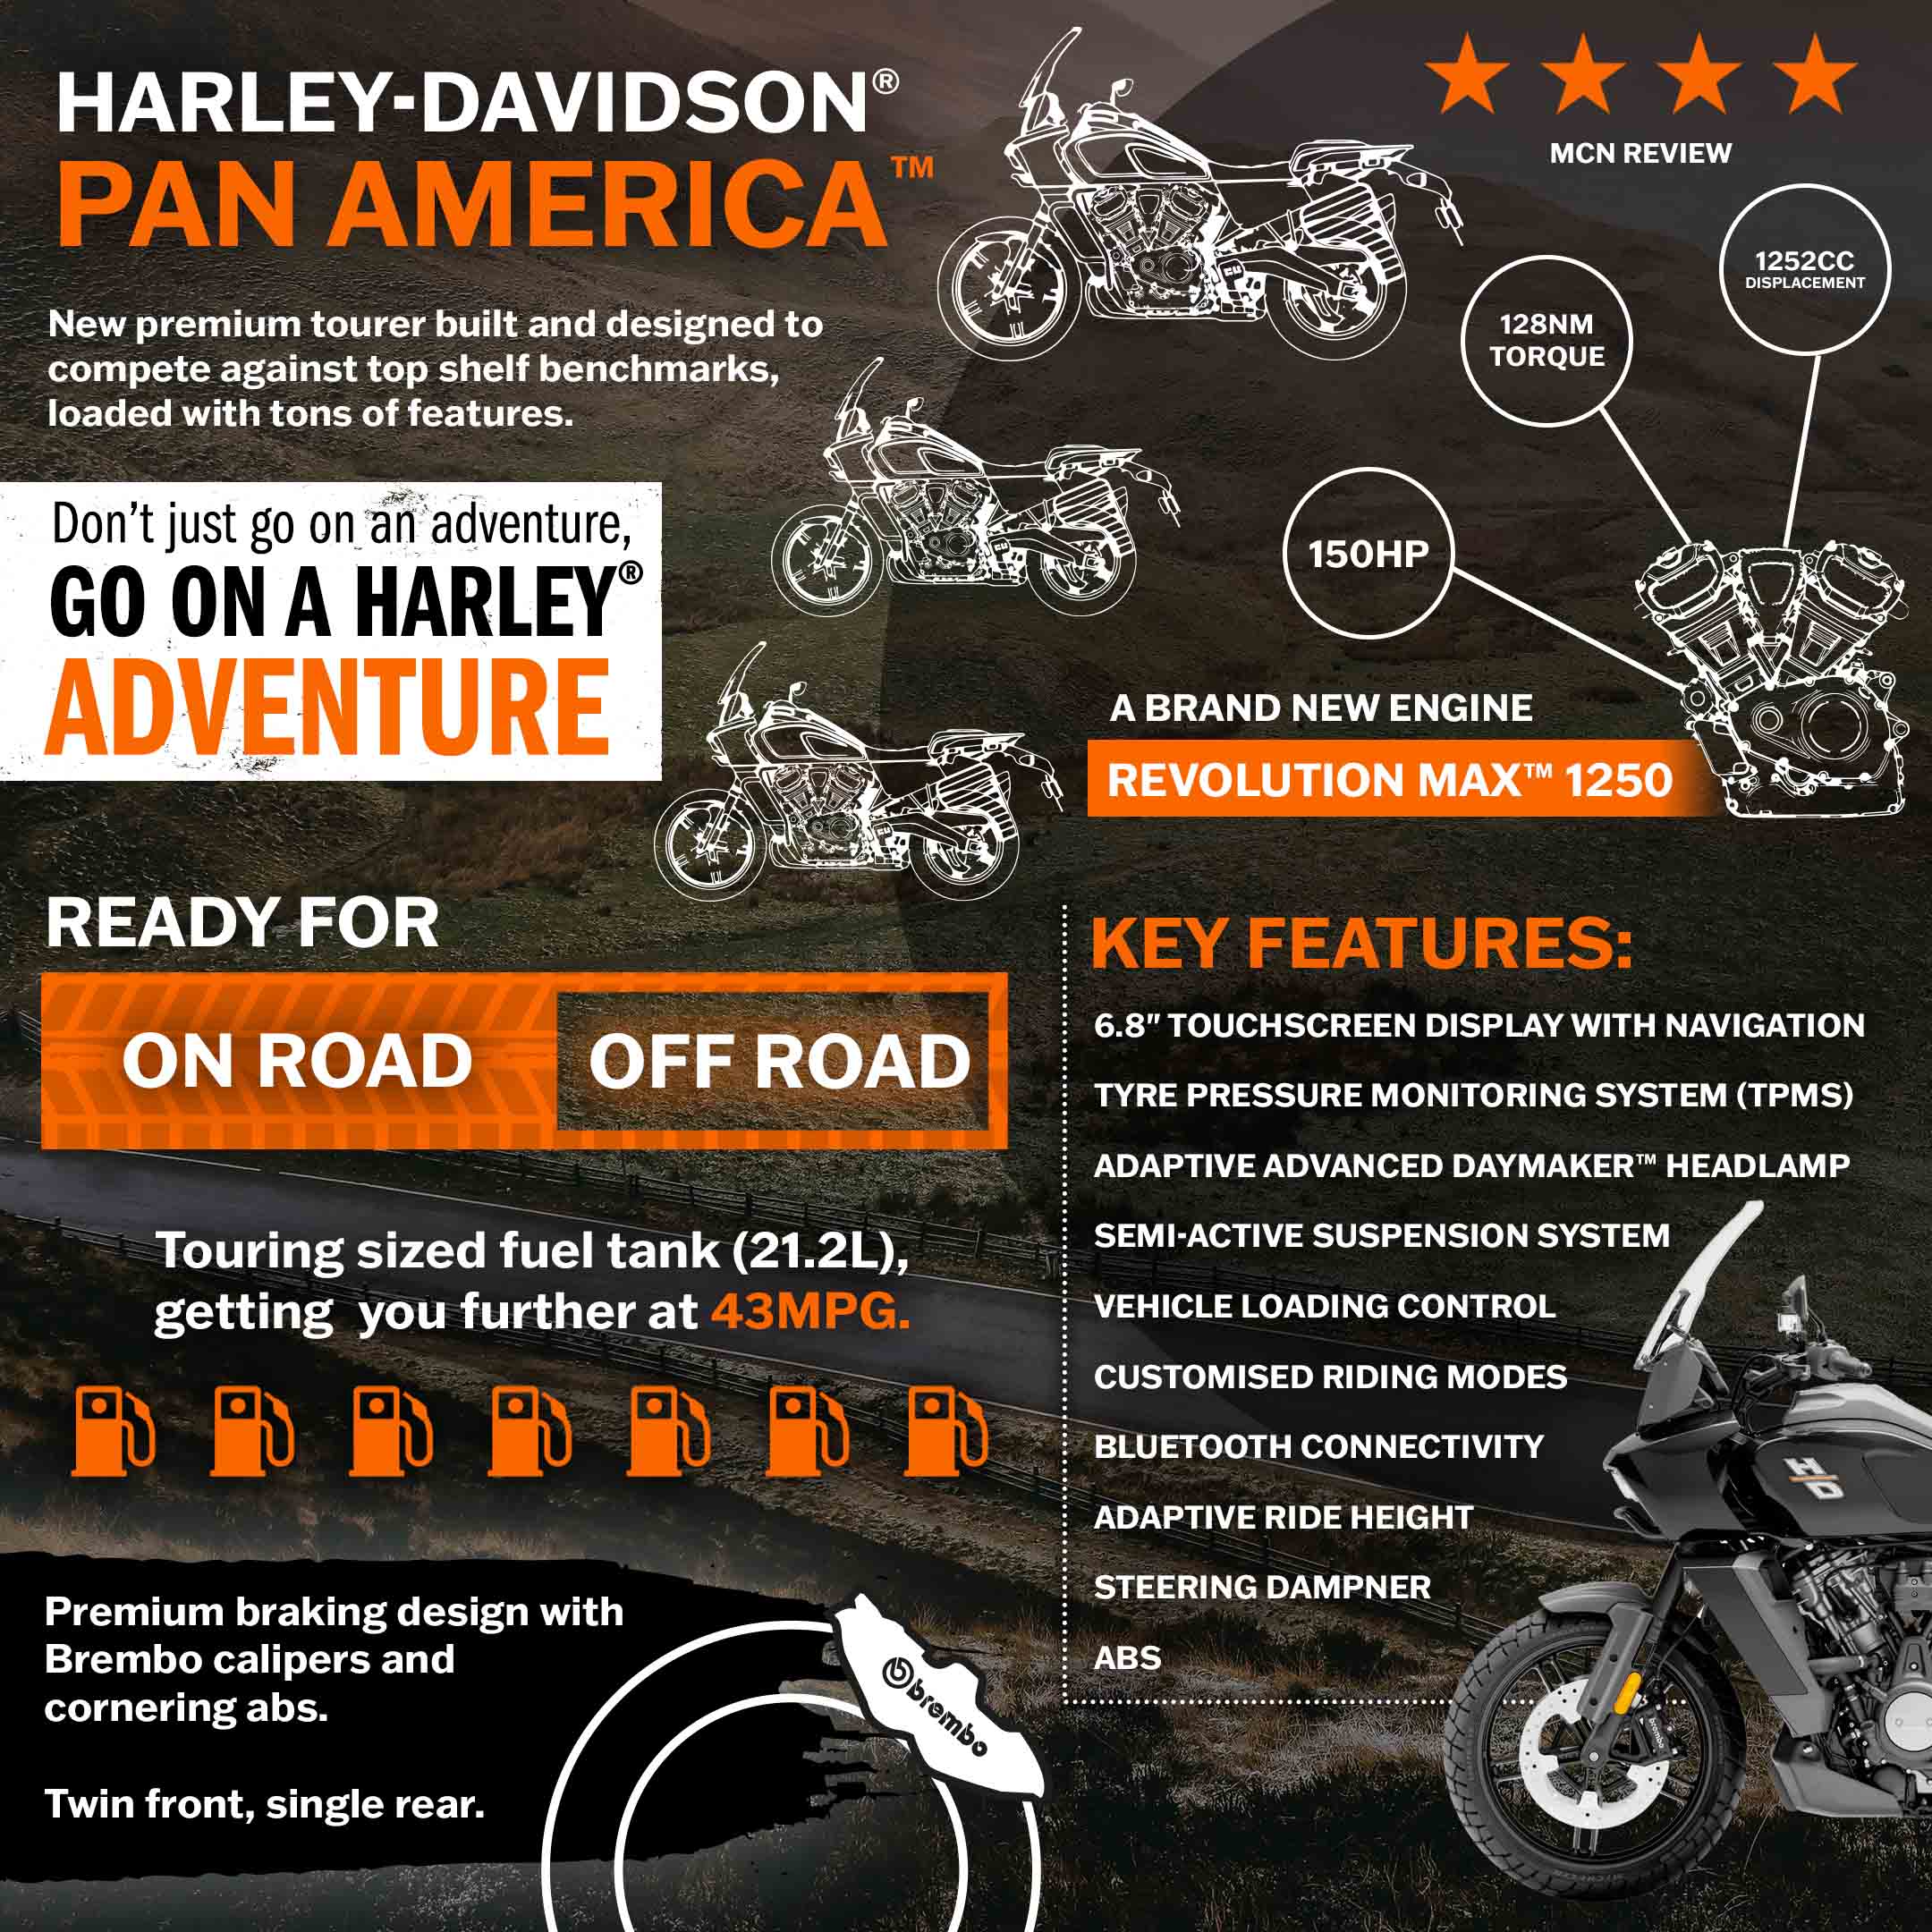 The Harley-Davidson Pan America Infographic